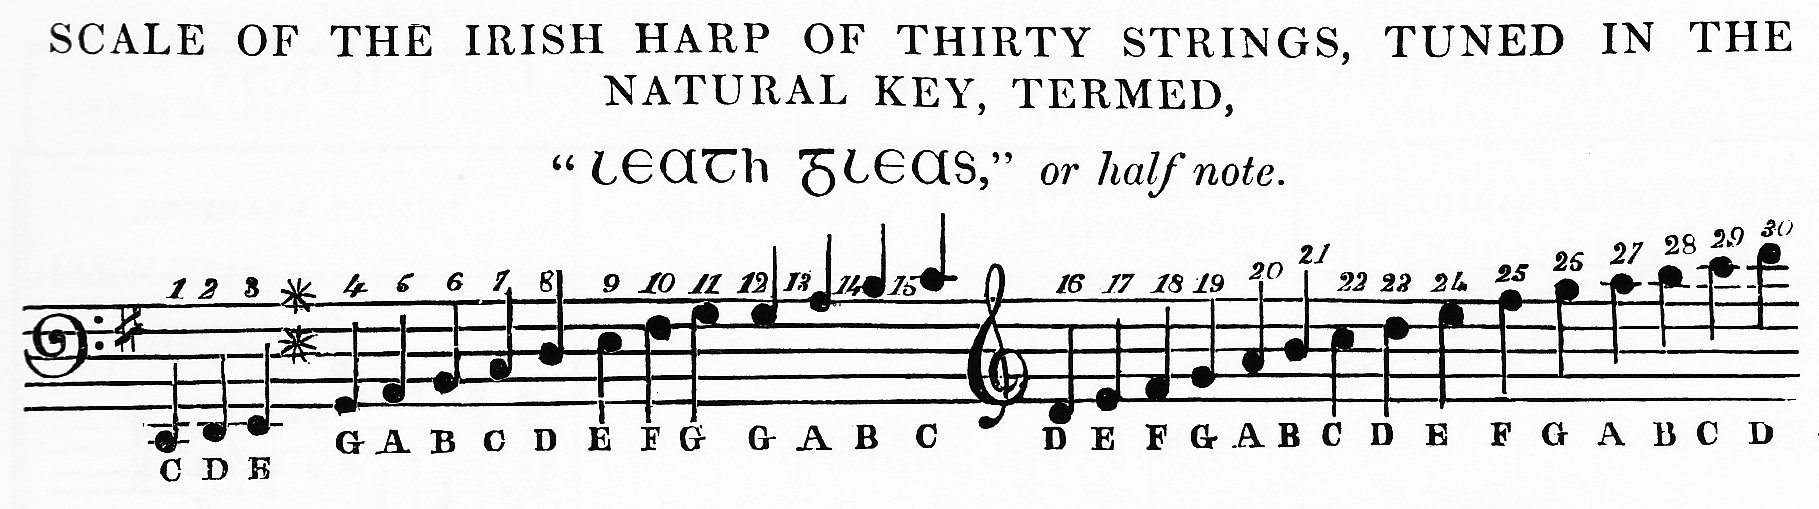 Hollybrook Harp Scale